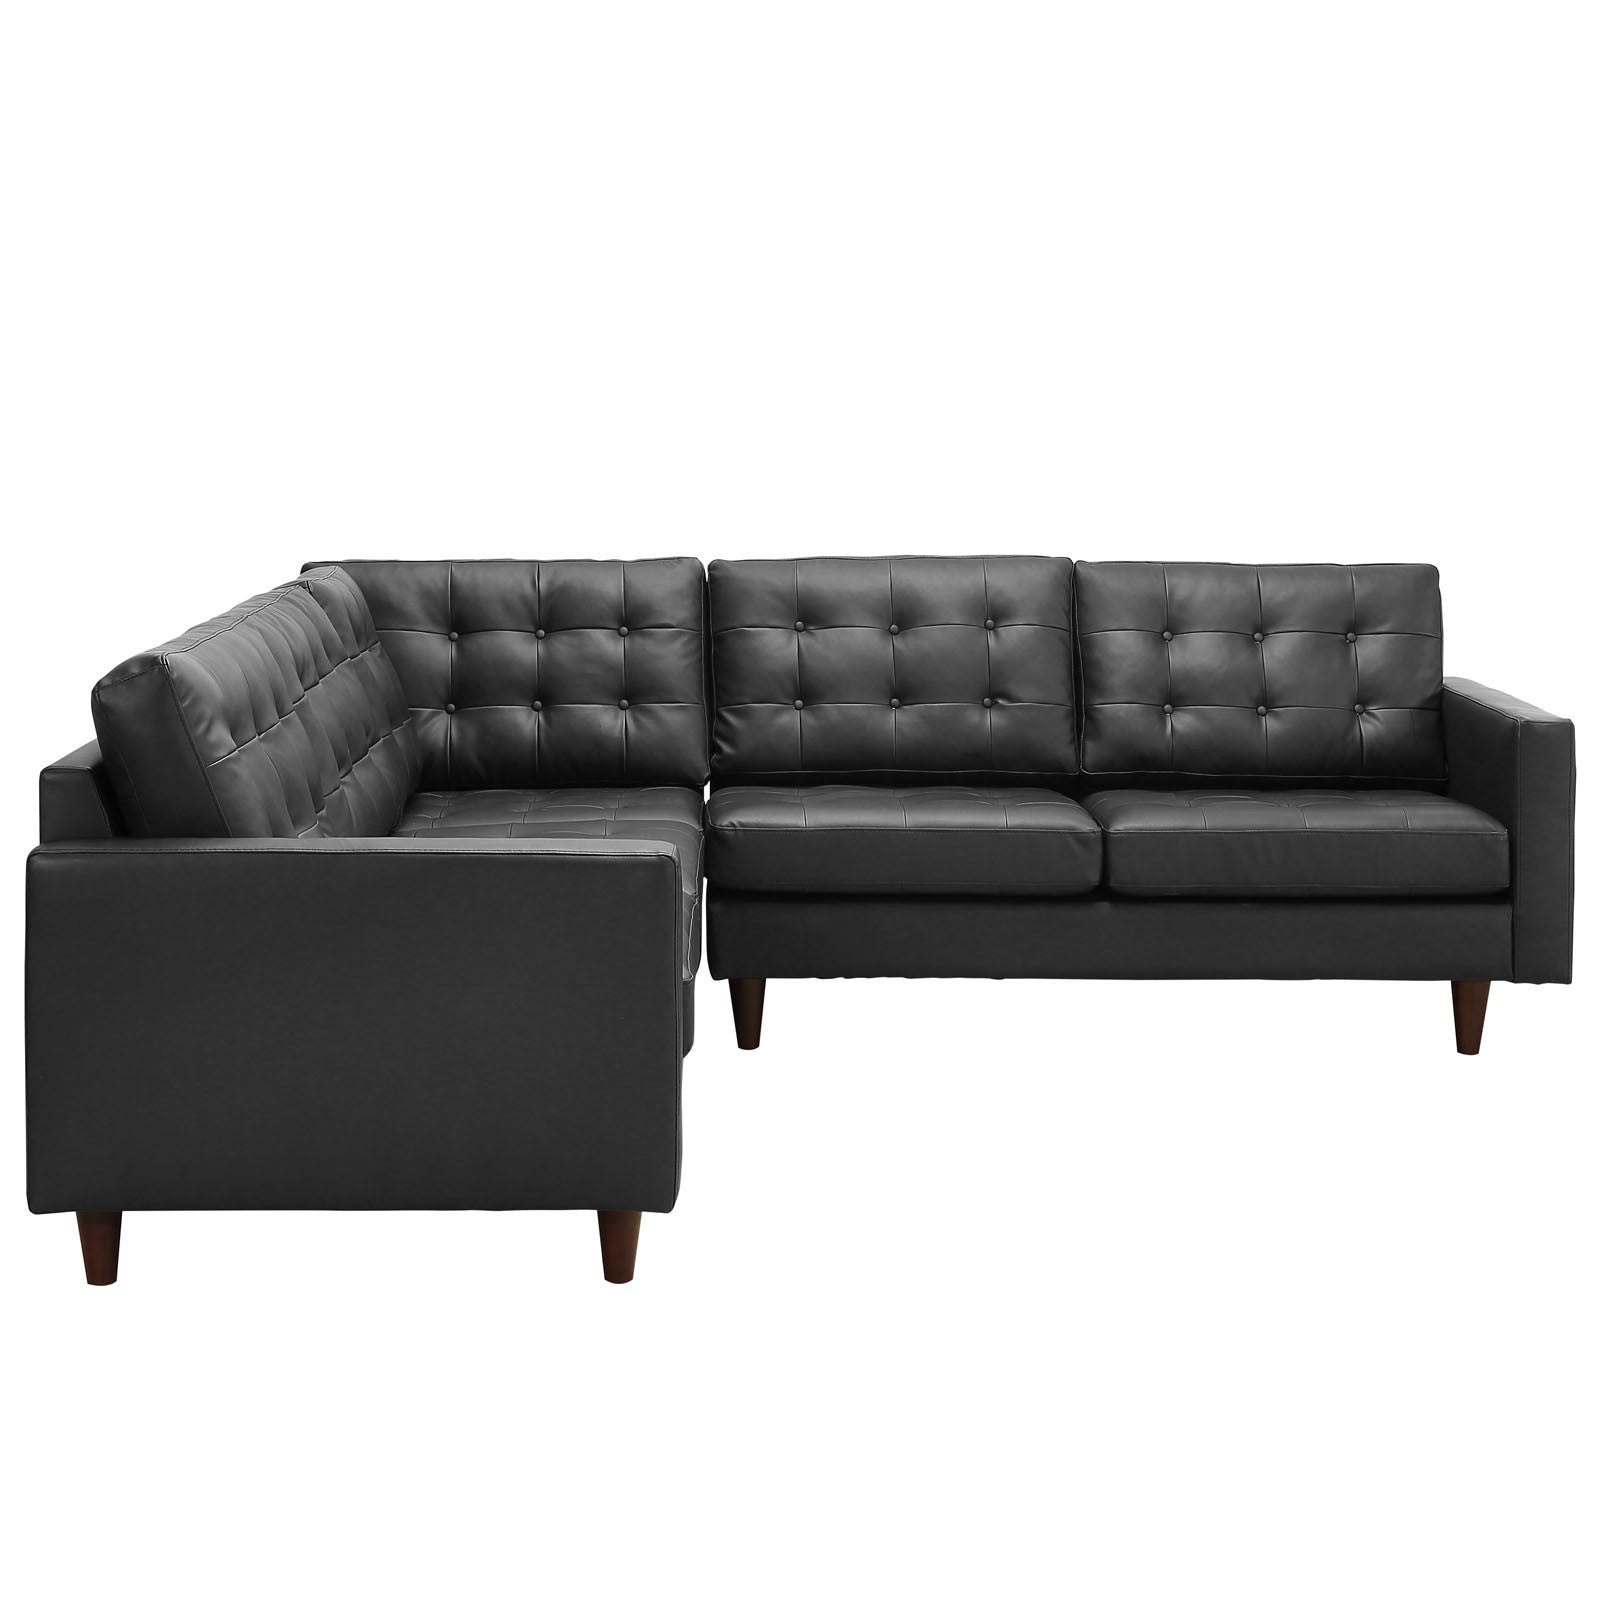 Era L-Shaped Leather Sectional Sofa Black